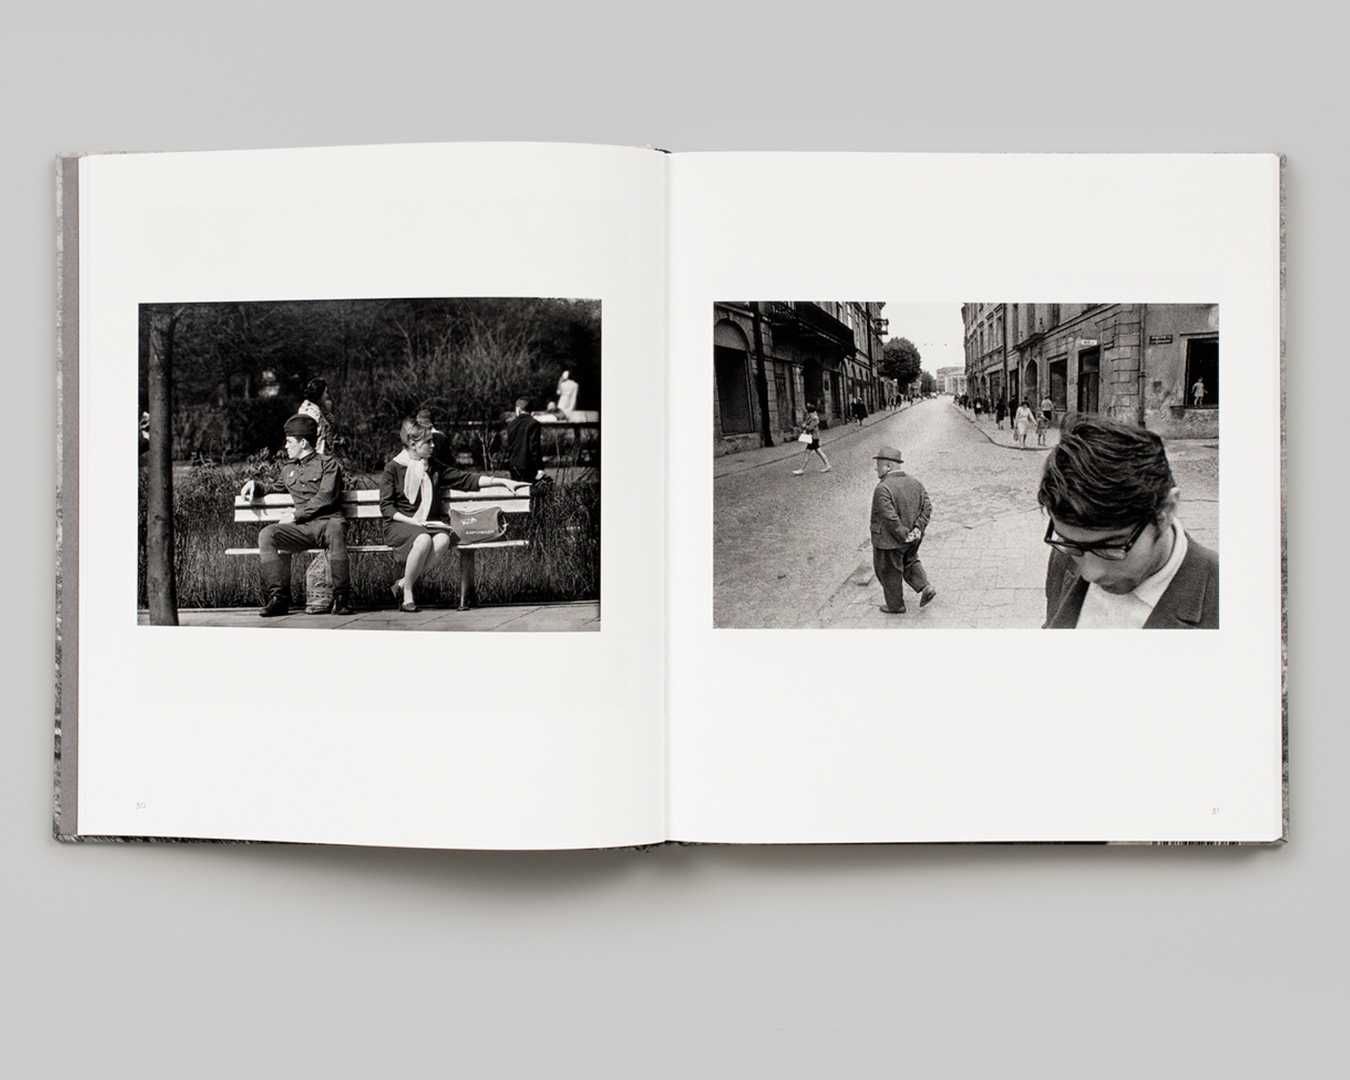 Книга Antanas Sutkus: Street Life